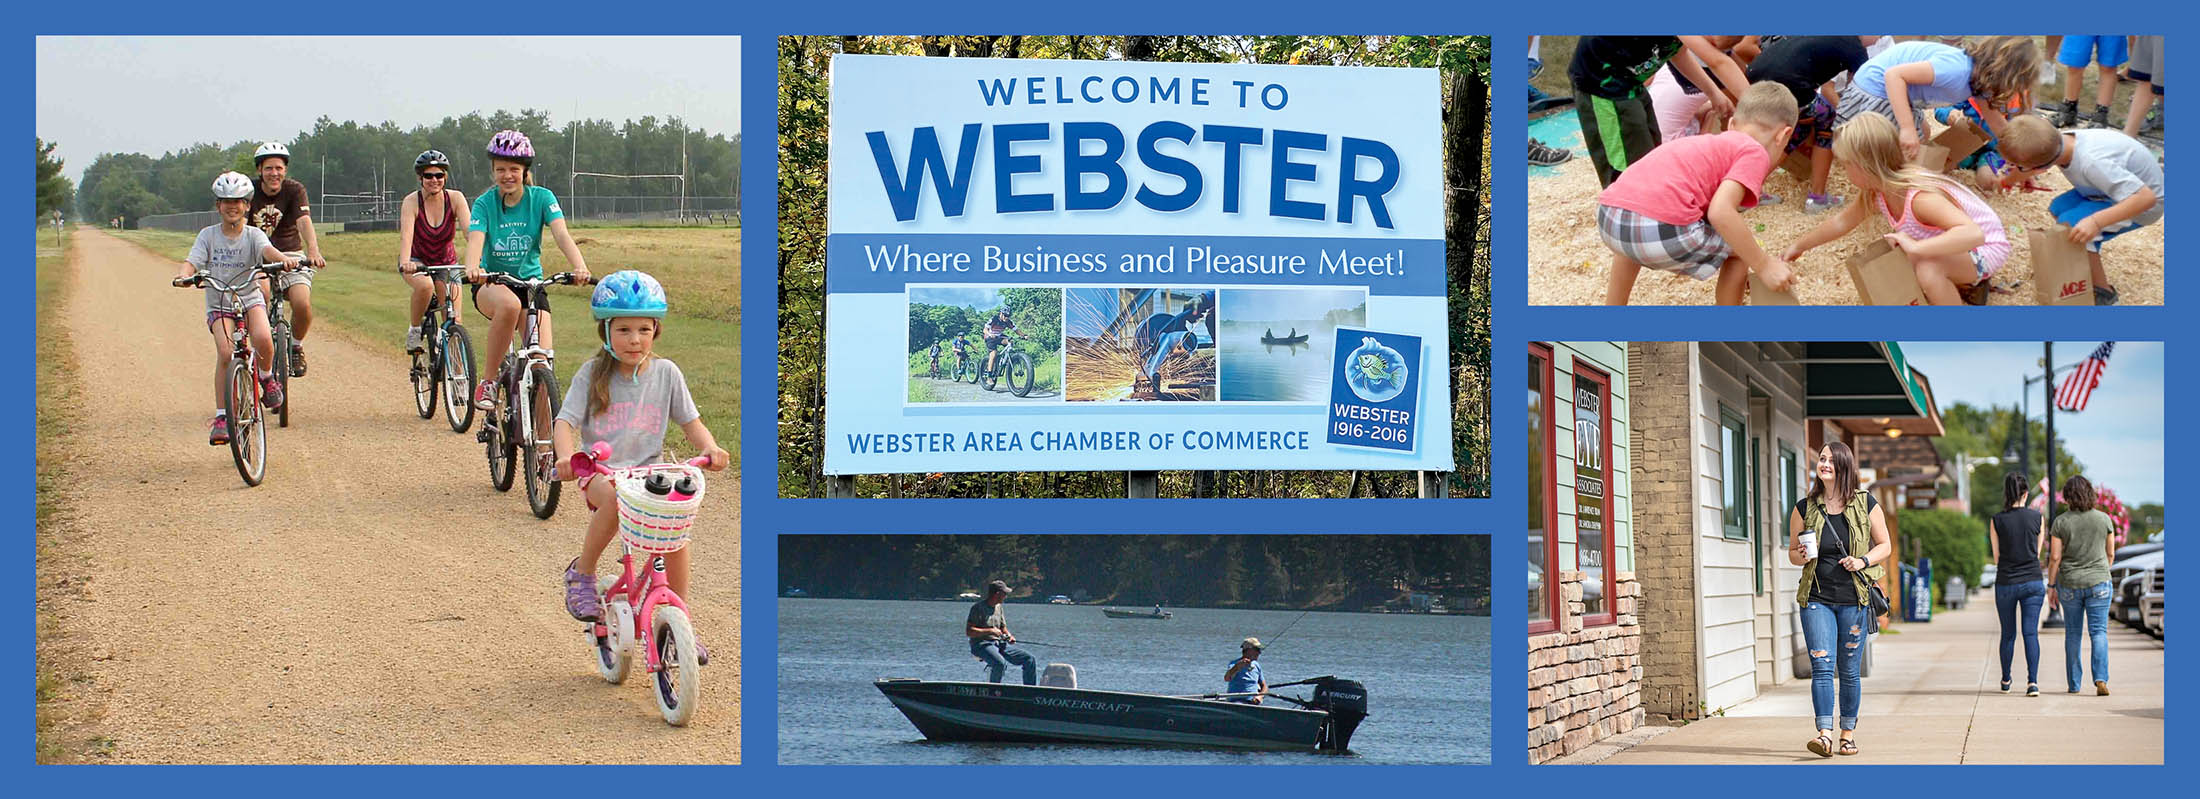 Webster Area Chamber of Commerce, Village of Webster, Wisconsin